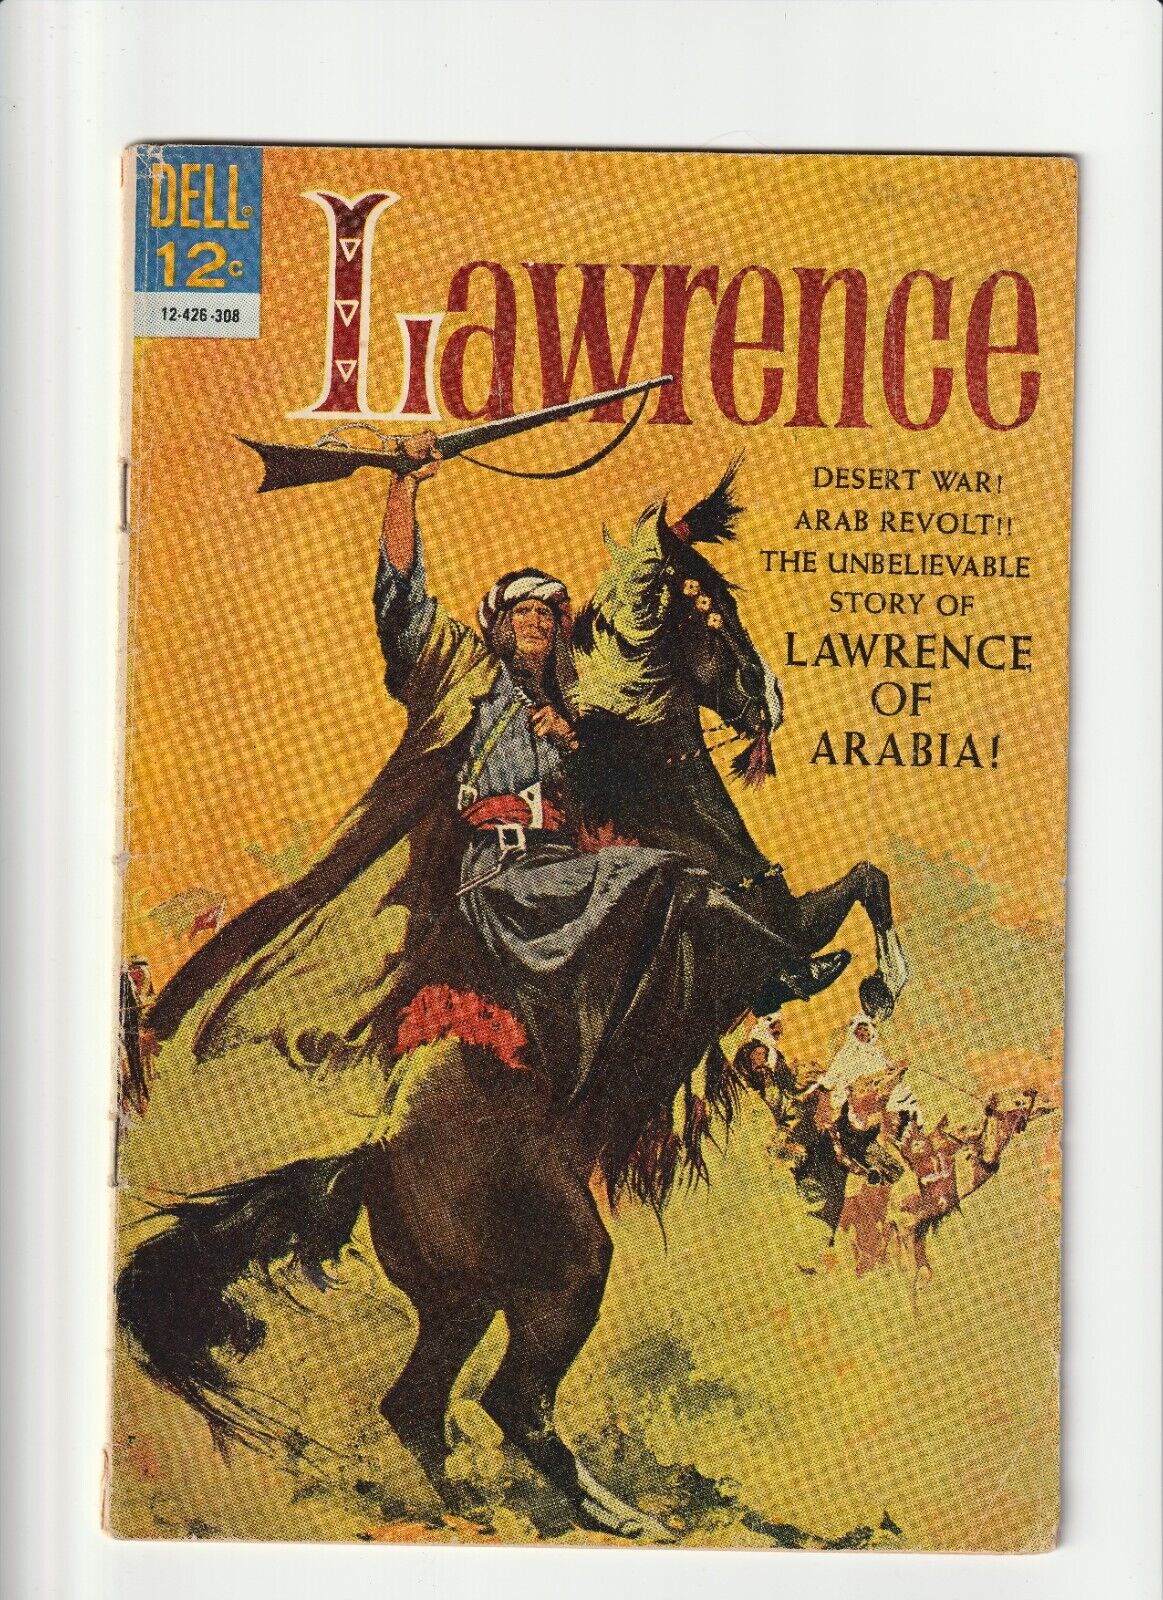 Lawrence (of Arabia) #12-426-308 Dell 1963 Movie Adaptation Good